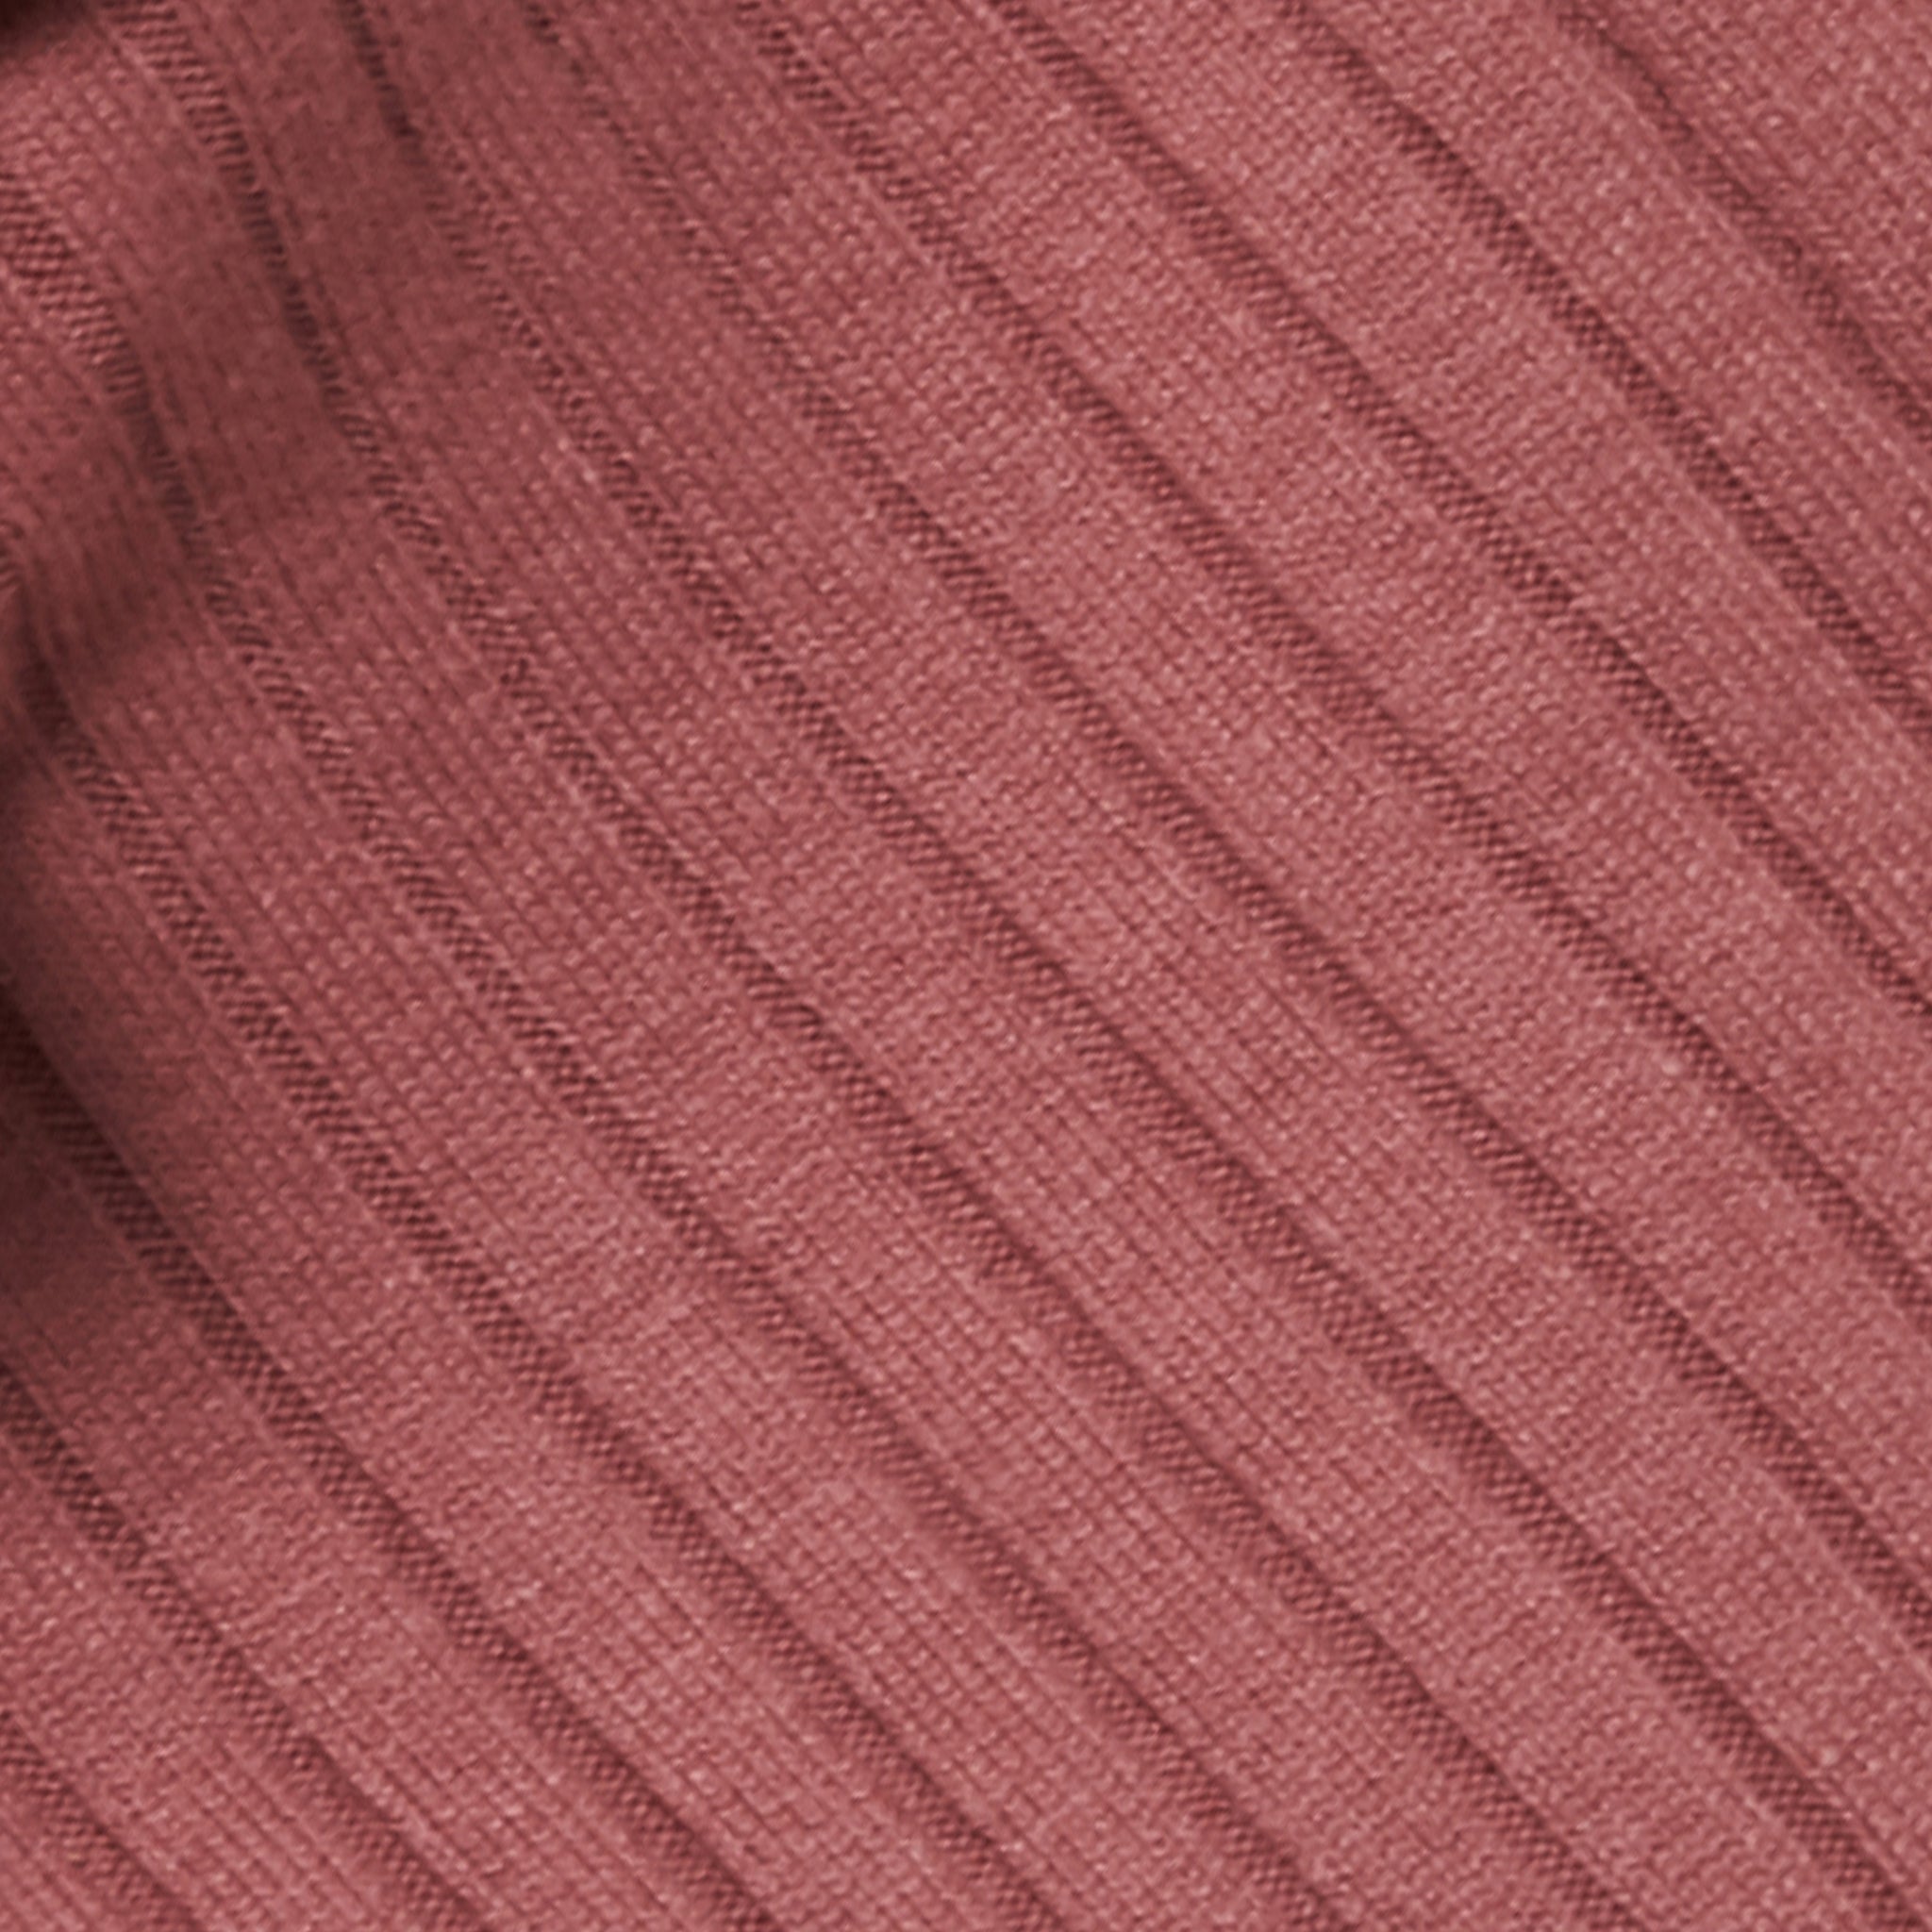 hello ronron } Sylvie Skirt Rose | Button-embellished ribbed knit midi skirt